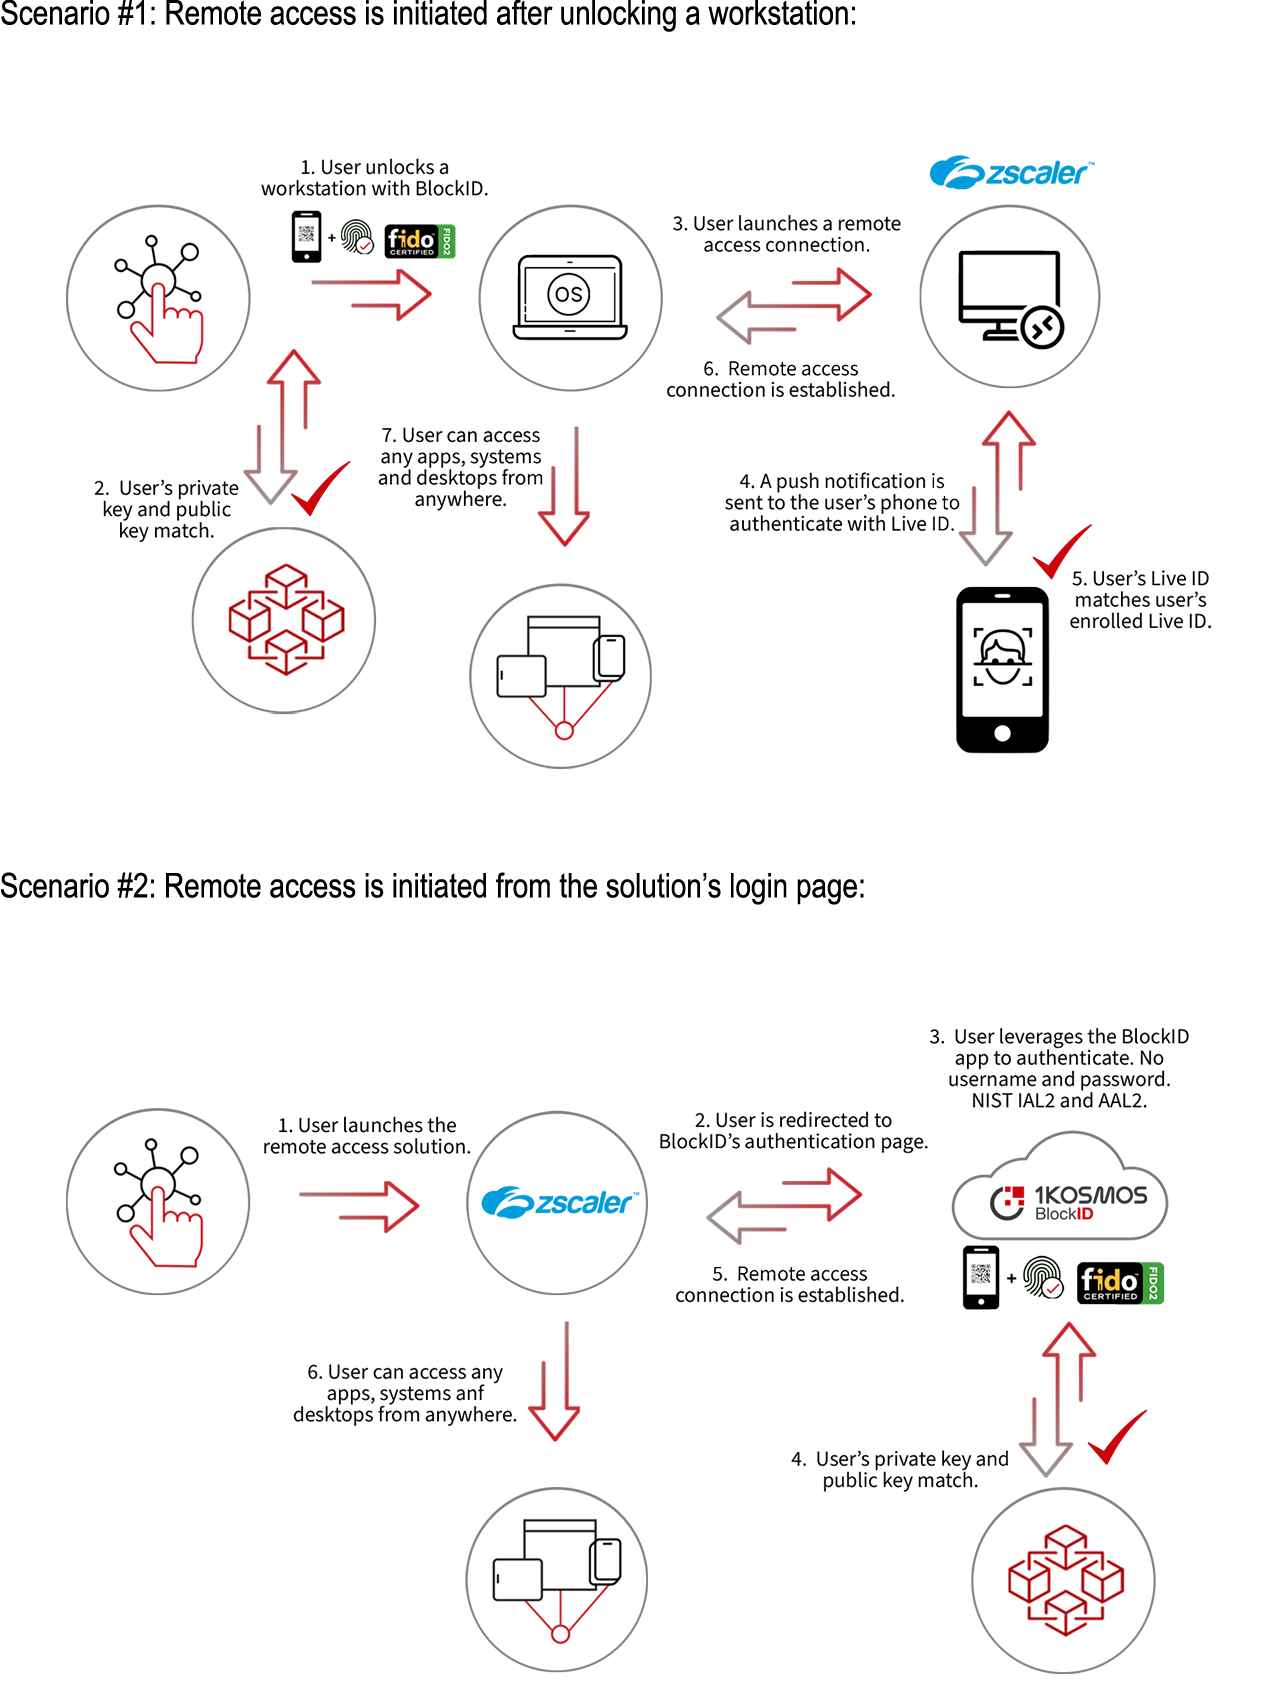 zscaler diagram scenario 1 and 2